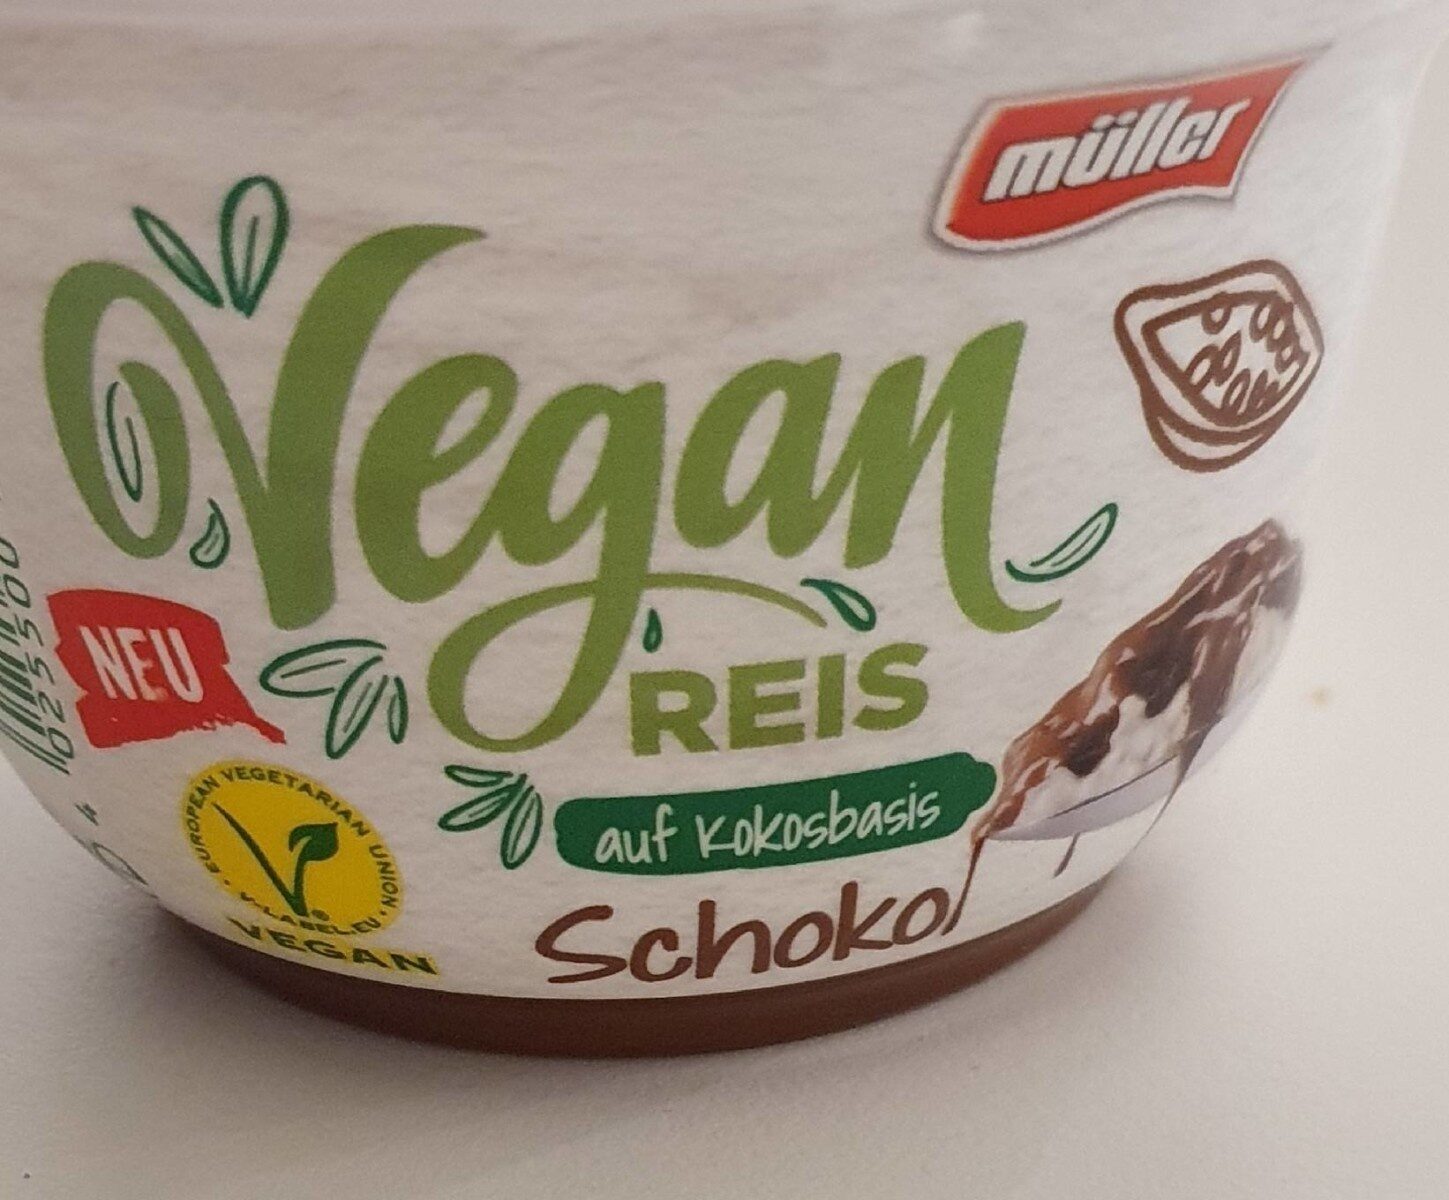 Vegan Reis auf Kokosbasis Schoko - Product - de